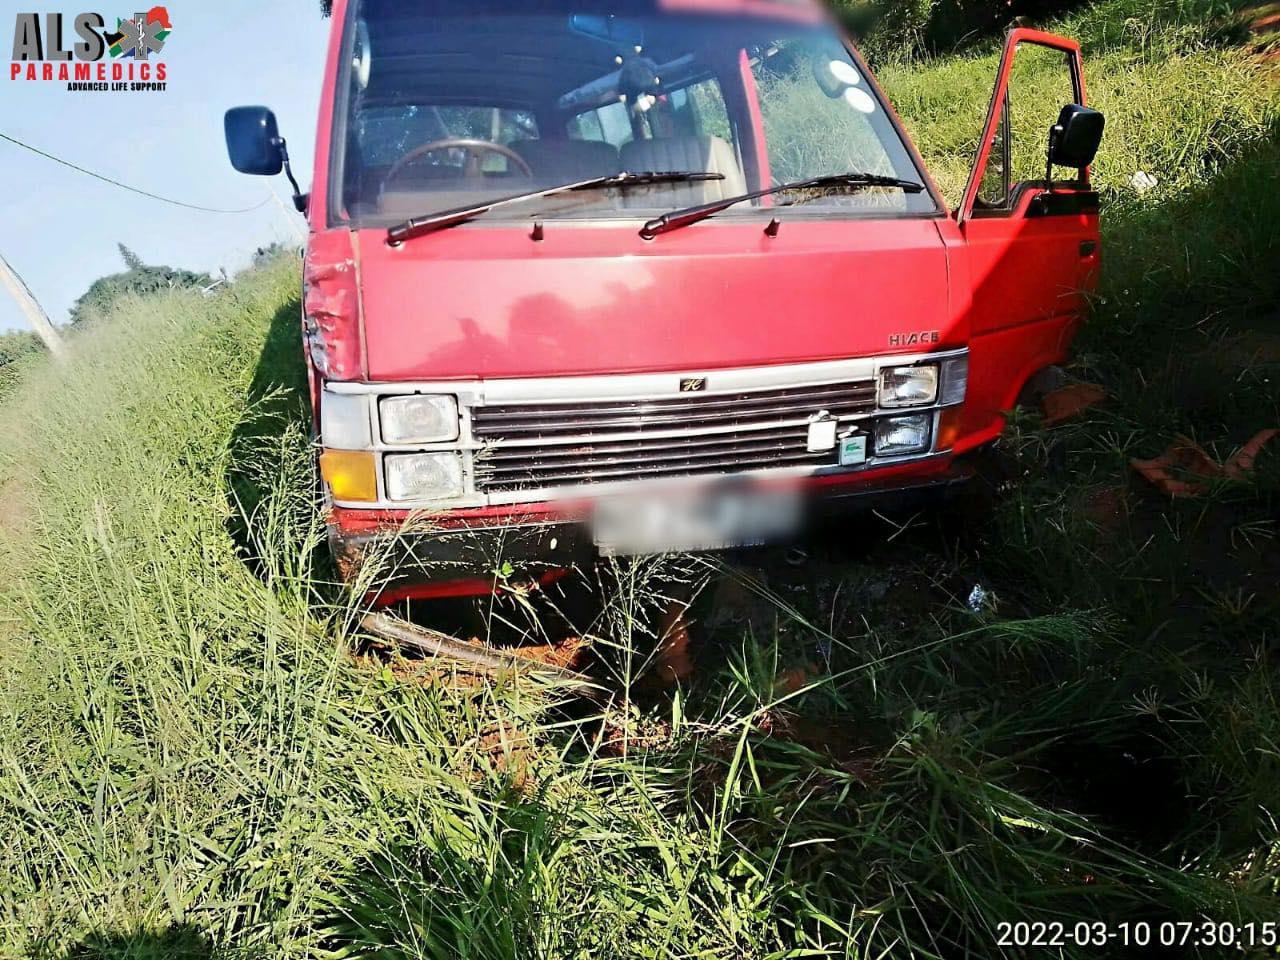 Twelve KZN pupils injured in taxi crash on their way to school